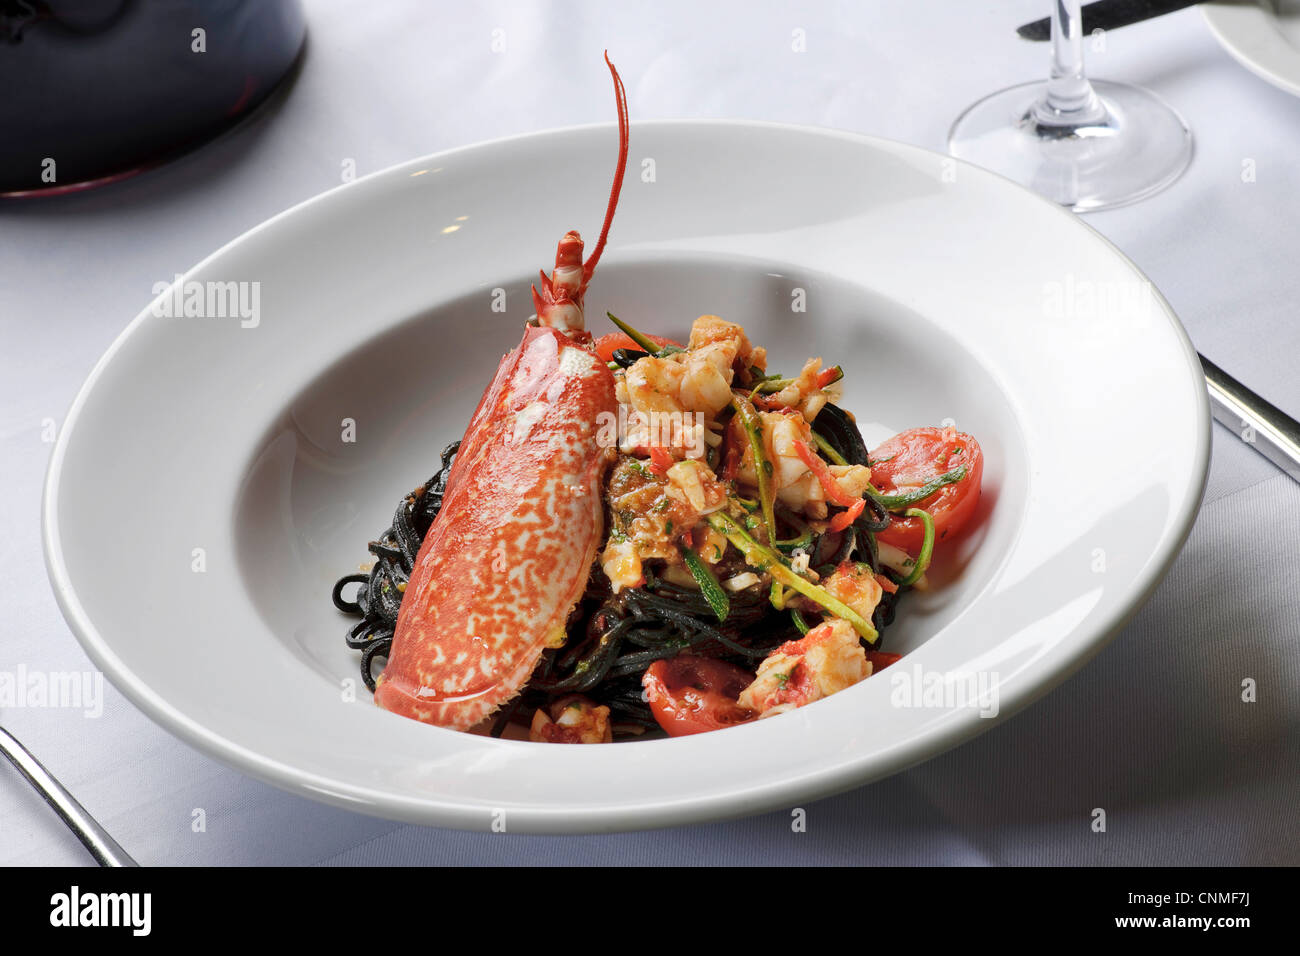 gourmet cuisine expensive restaurant food Stock Photo